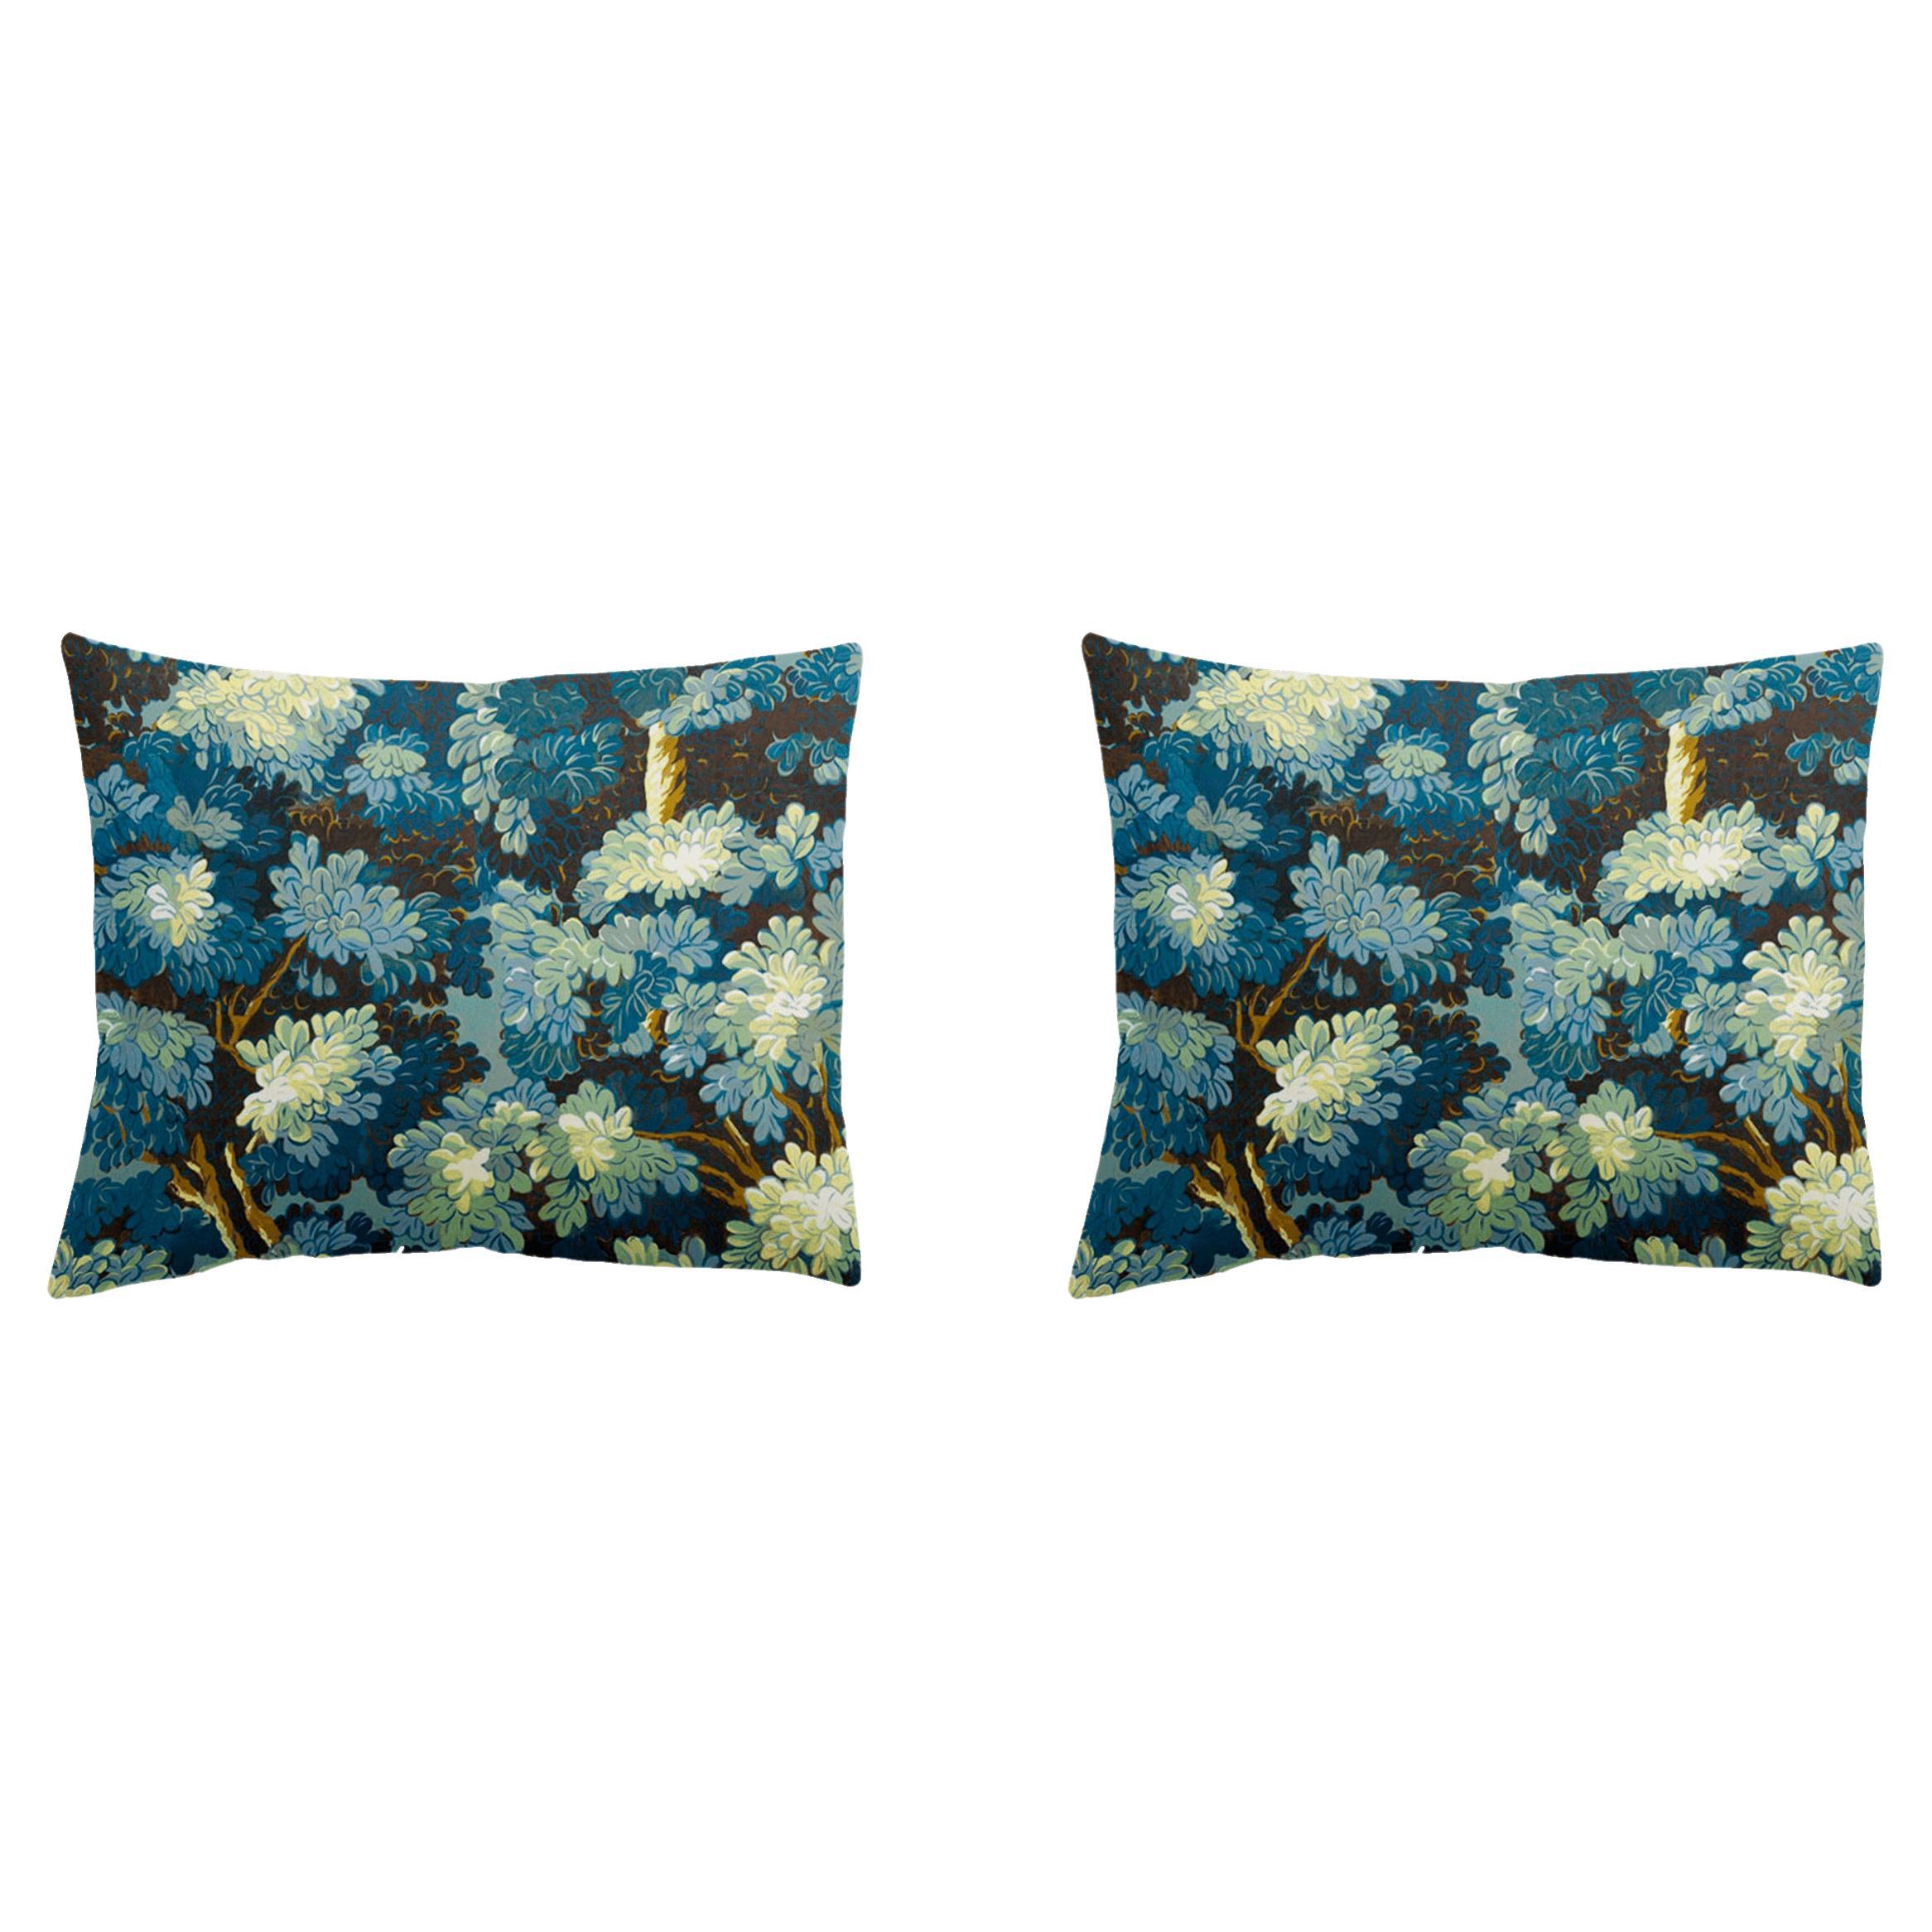 Pair of 12 x 16 Linen Pillows - Joli Boise Motif - Made in Paris For Sale